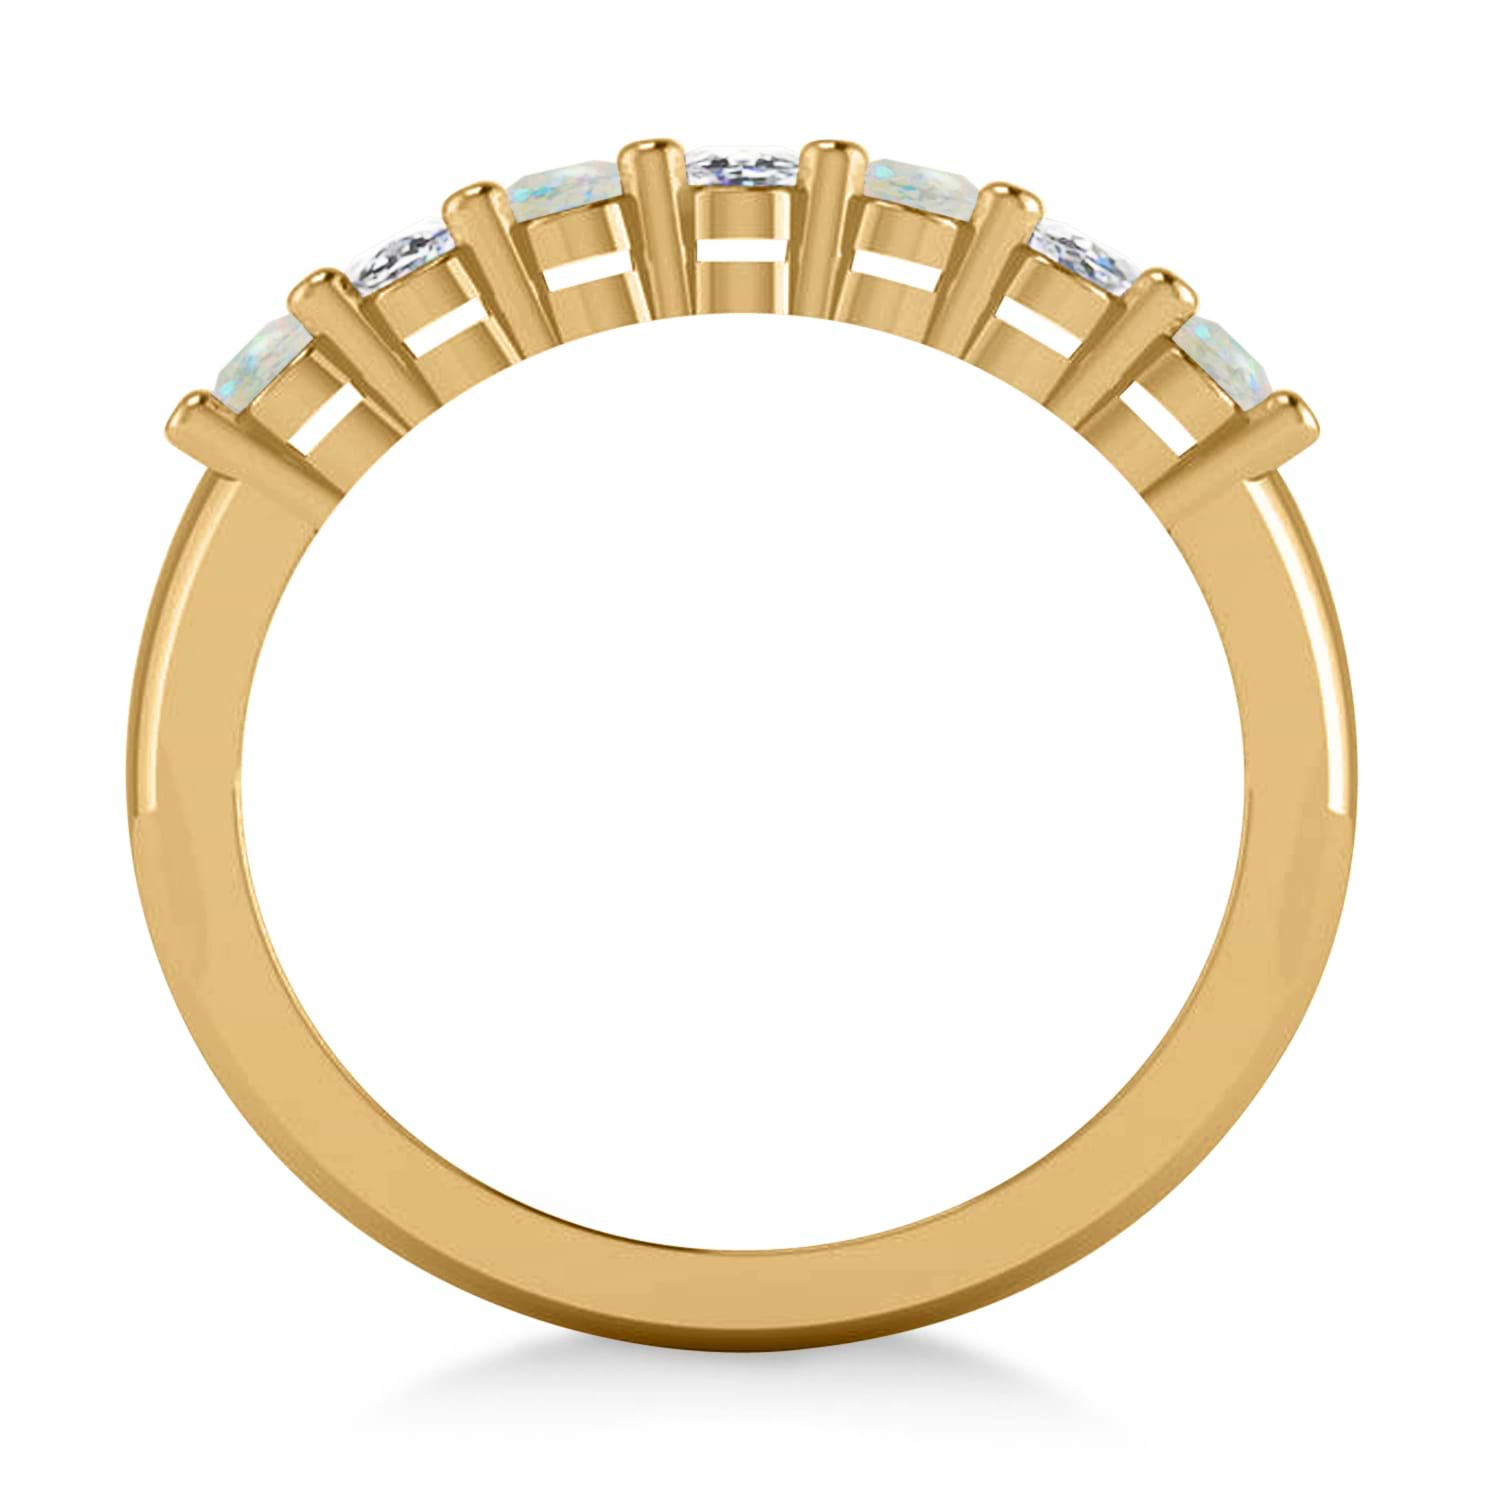 Oval Diamond & Opal Seven Stone Ring 14k Yellow Gold (1.40ct)